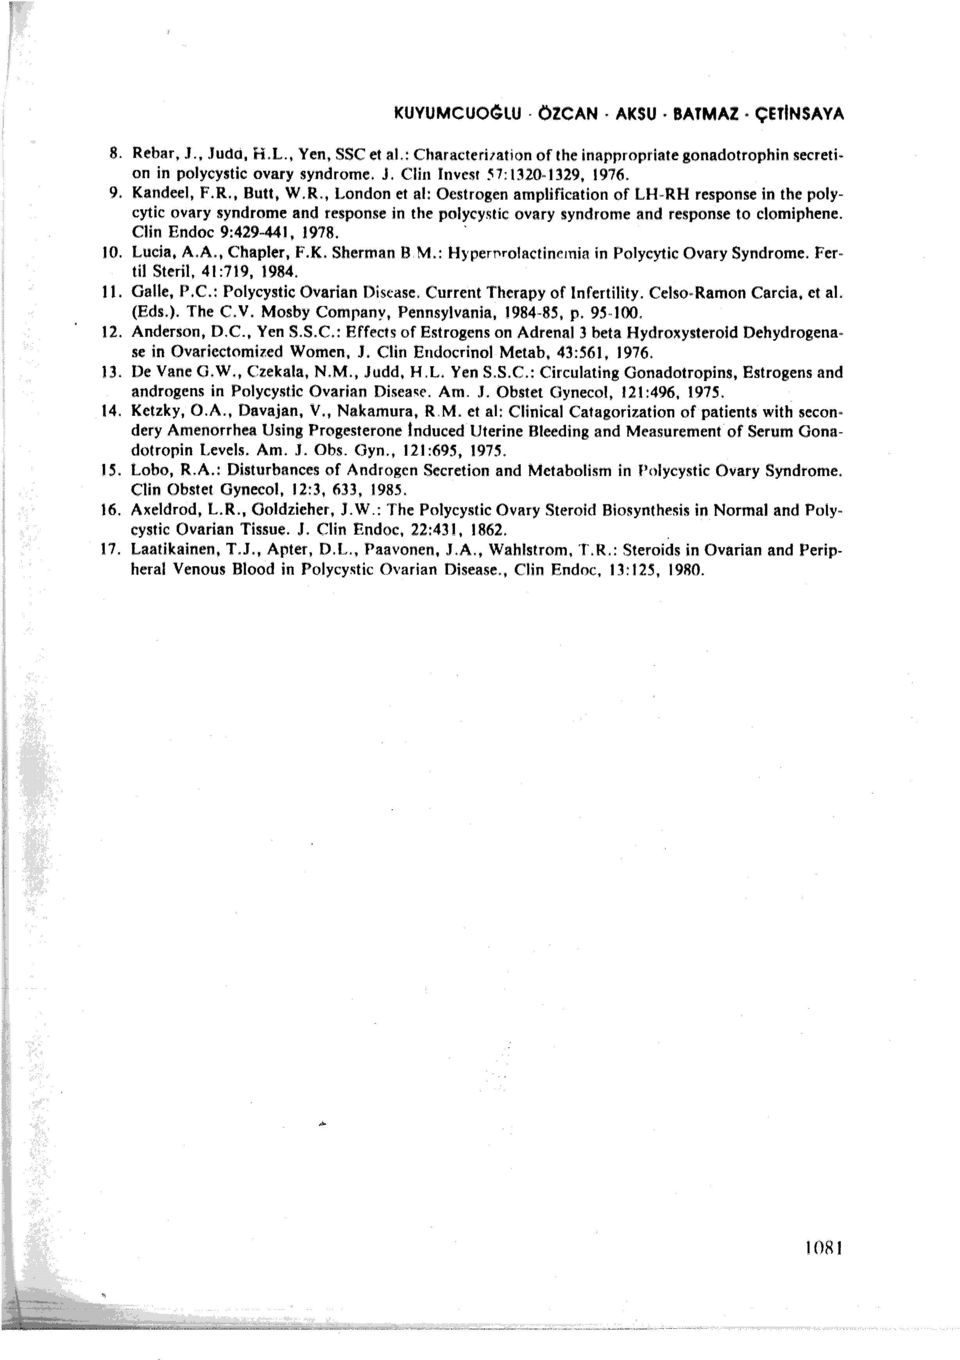 Clin Endoc 9:429-44, 978. 0. Lucia, A.A., Chapler, F.K. Shennan BM.: Hypenırolactinemia in Polycytic Ovary Syndrome. Fertil Steril. 4 :79, 984. l. Gaile, P.C.: Polycystic Ovarian Distase.